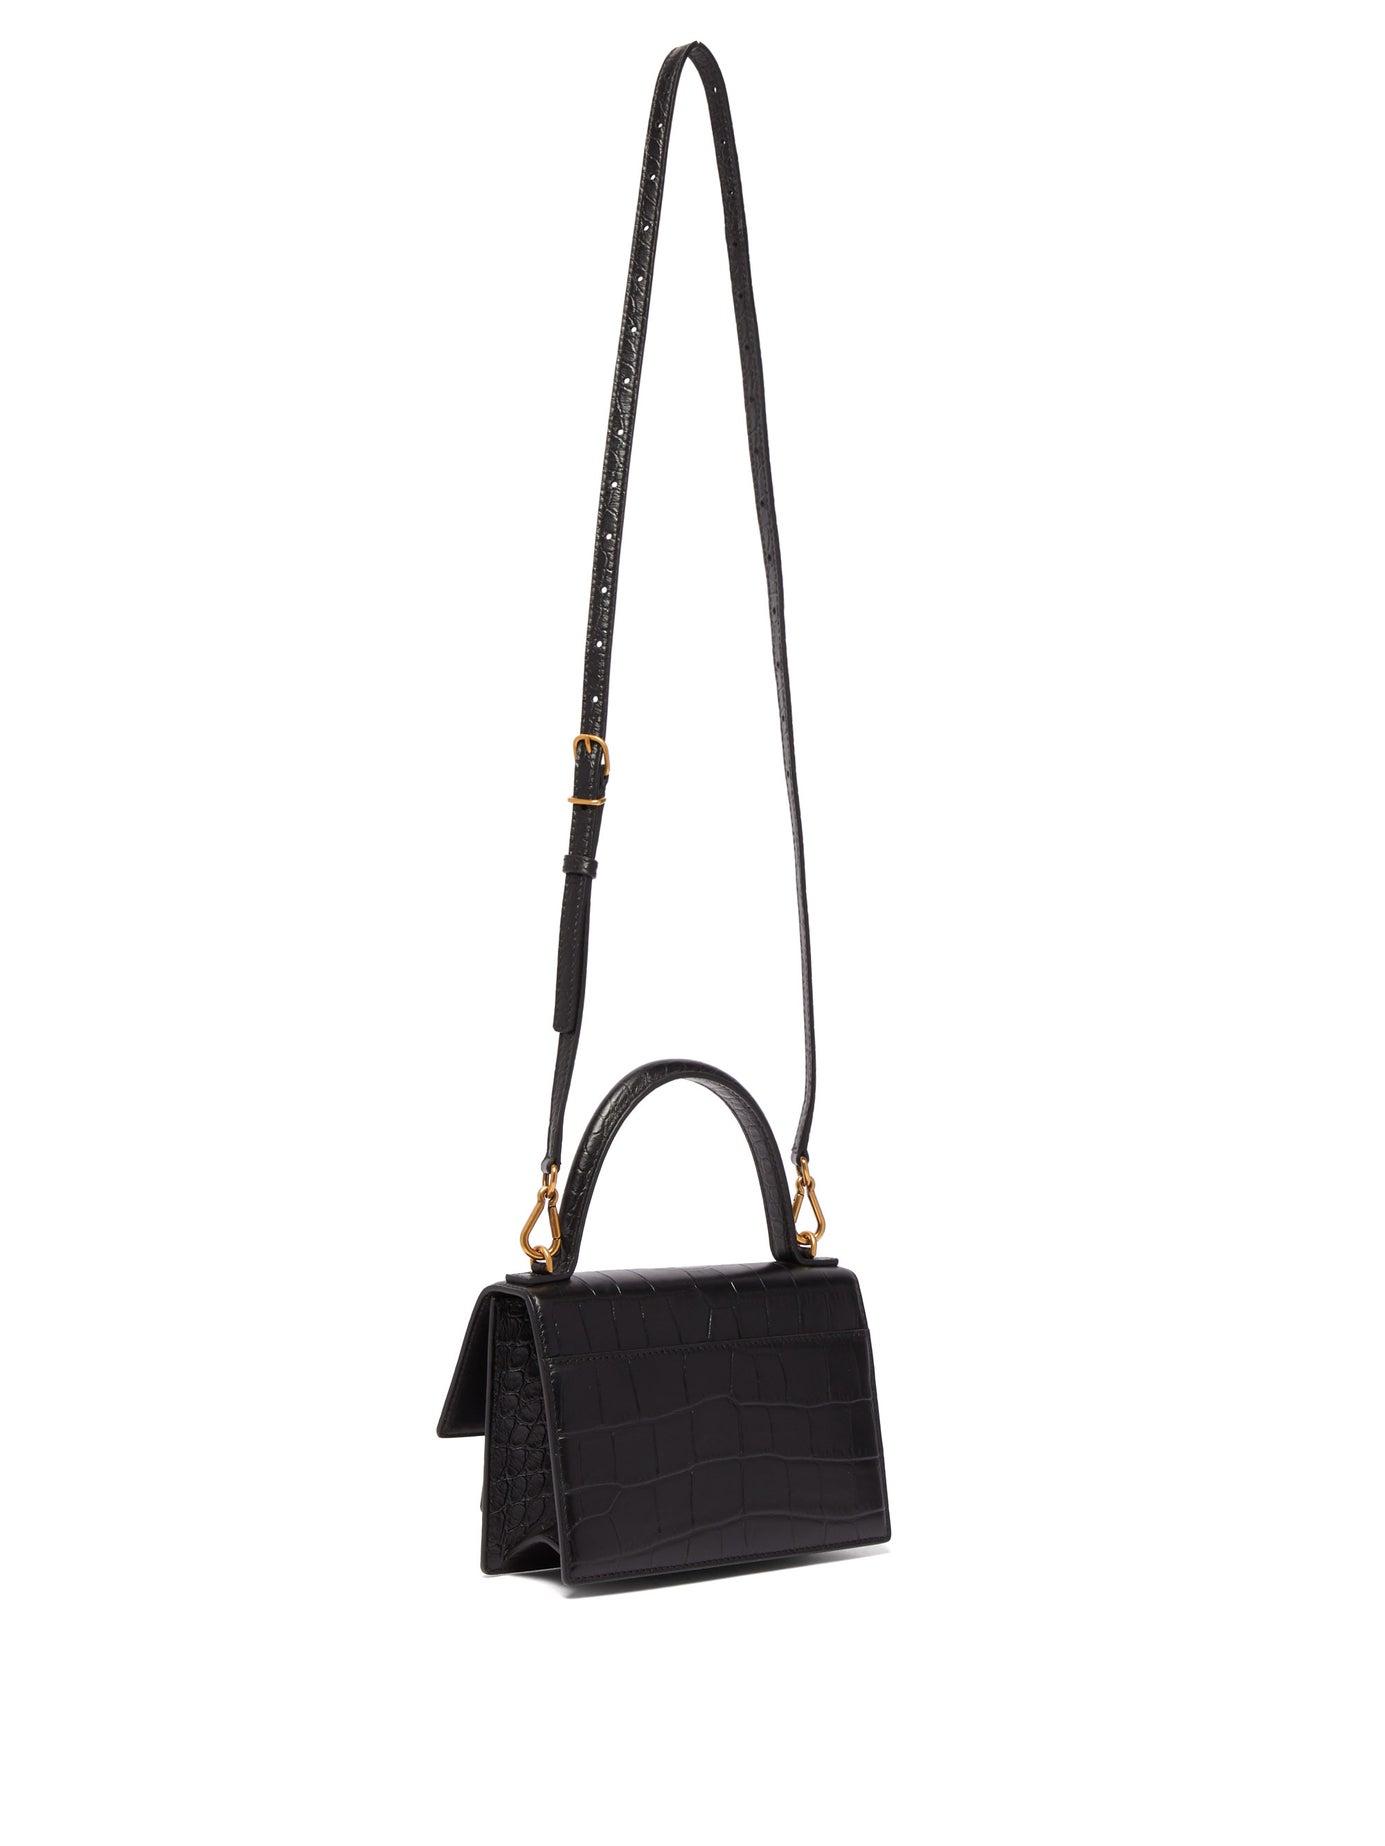 Balenciaga Sharp Xs Crocodile-effect Leather Cross-body Bag in Black | Lyst